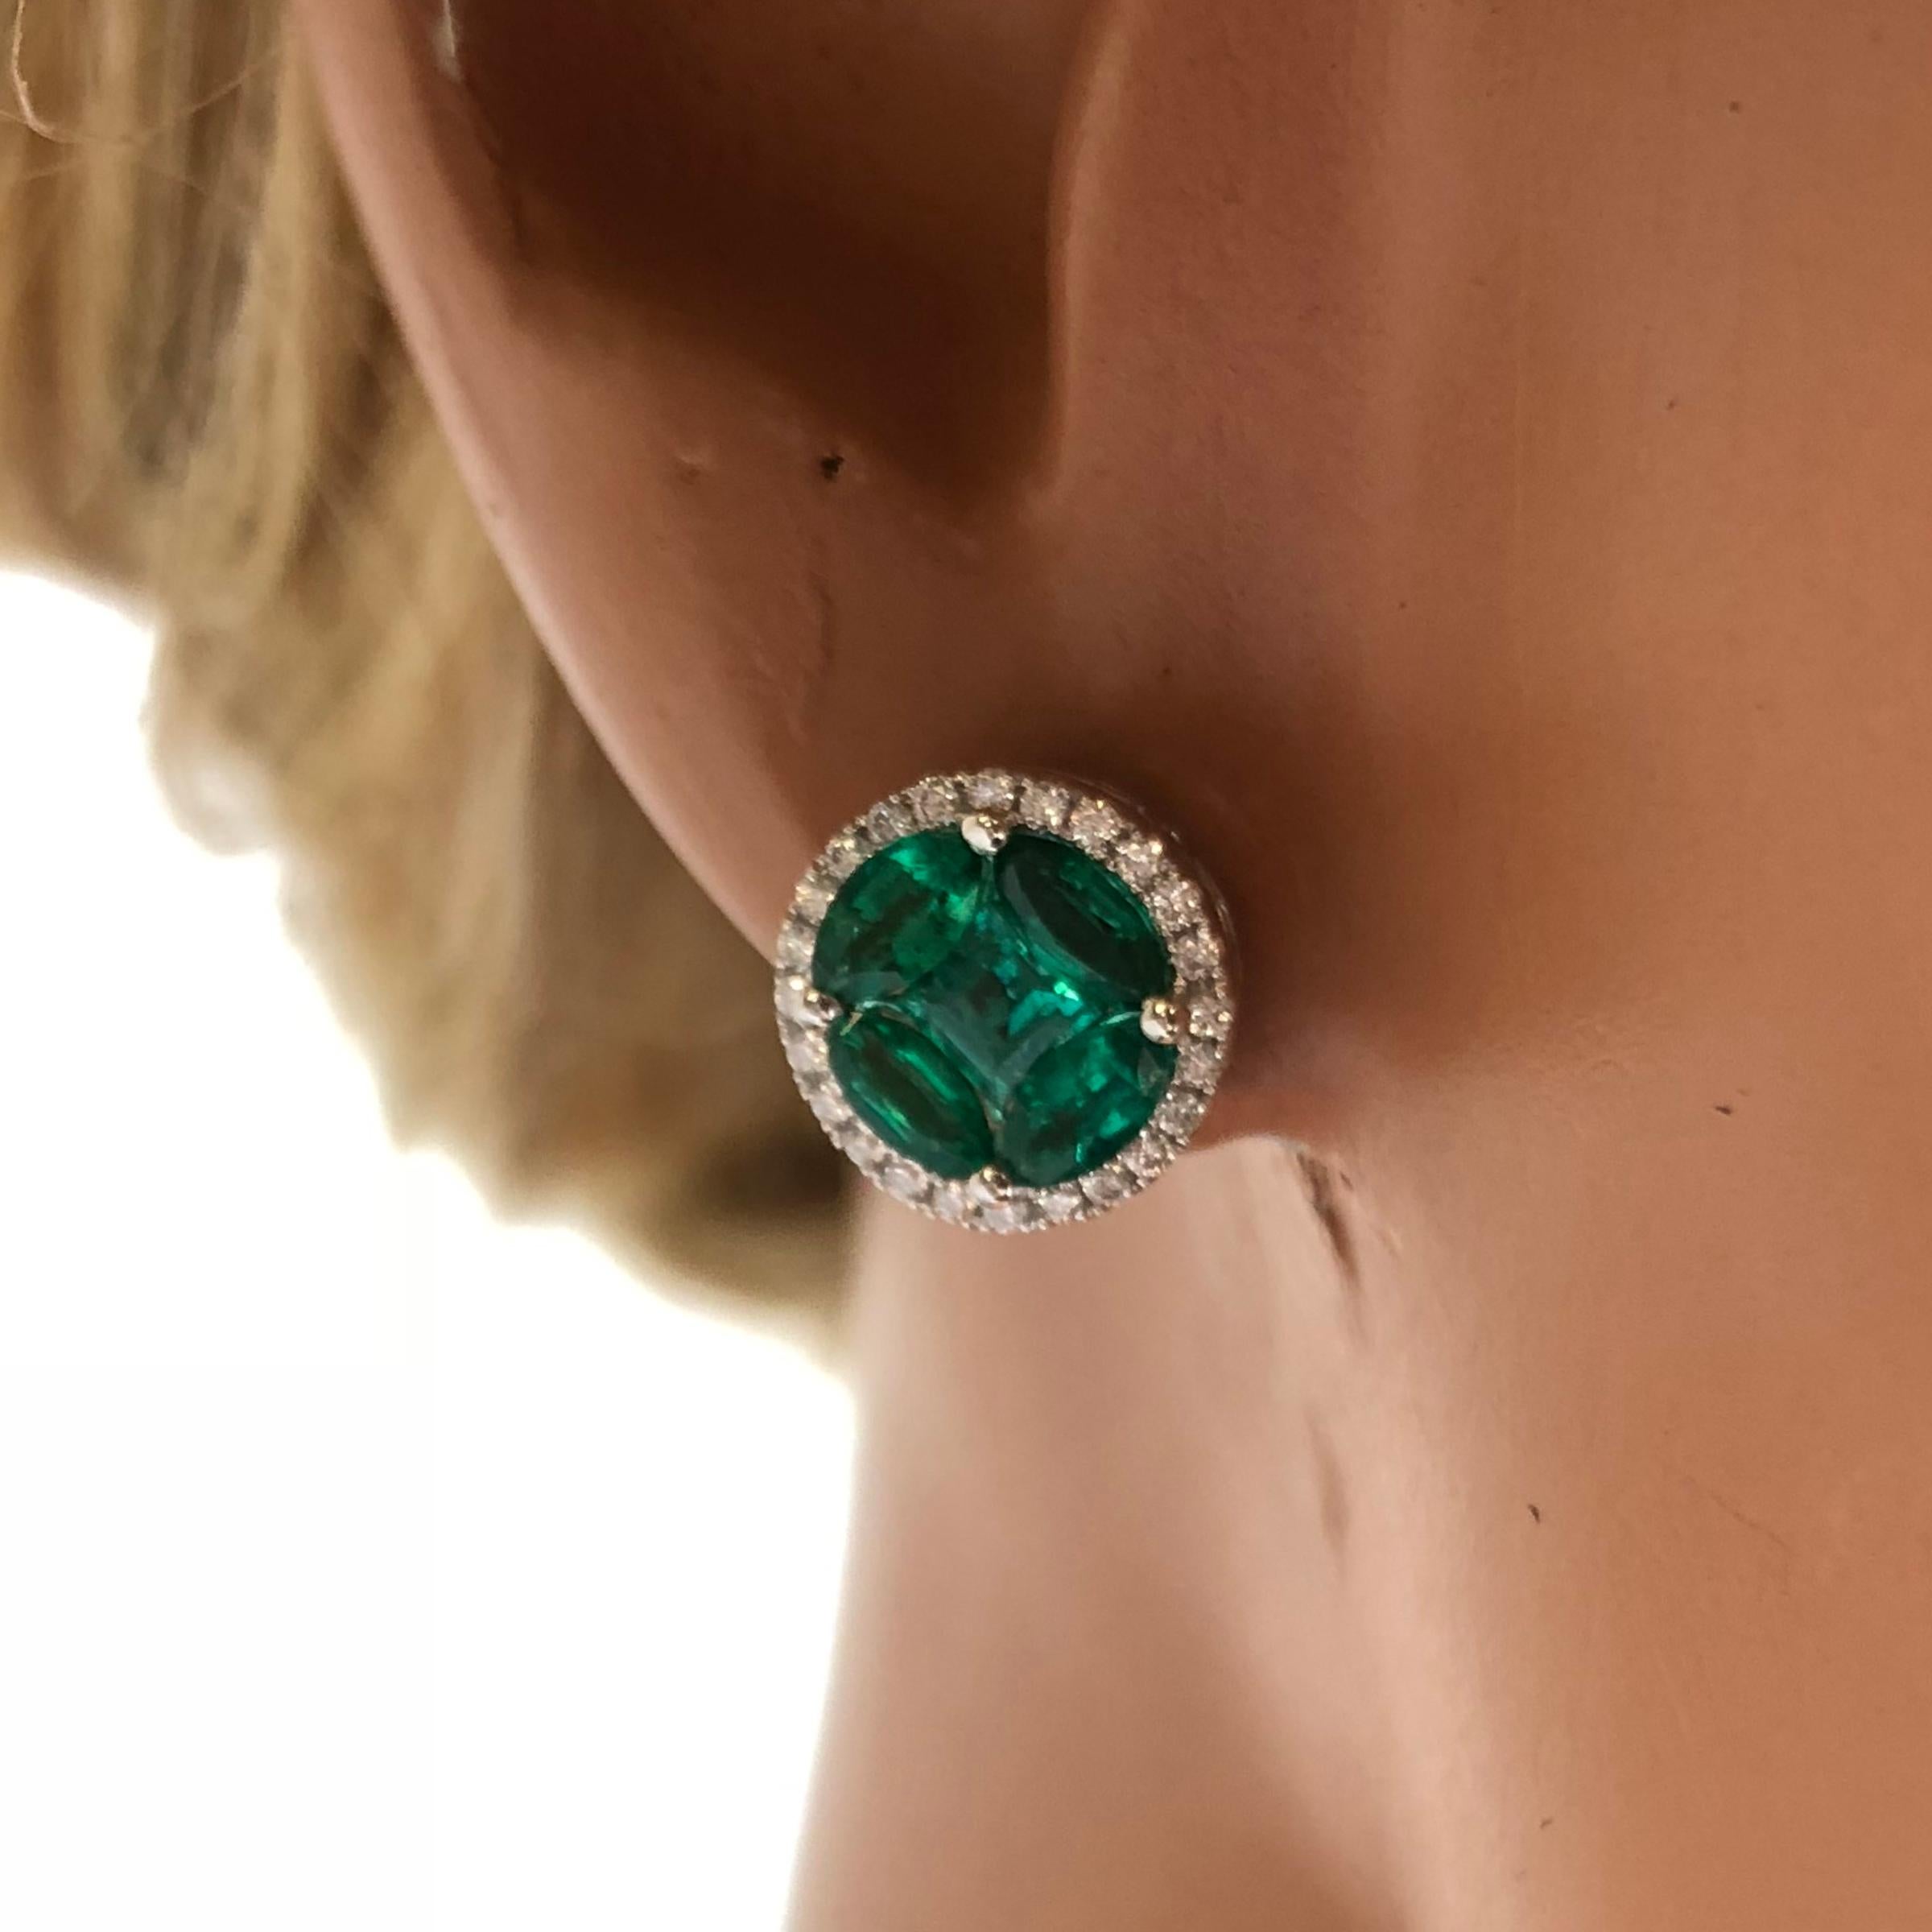 Contemporary 1.28 Carat Emerald and 0.22 Carat Diamond Stud Earrings in 18 Karat White Gold